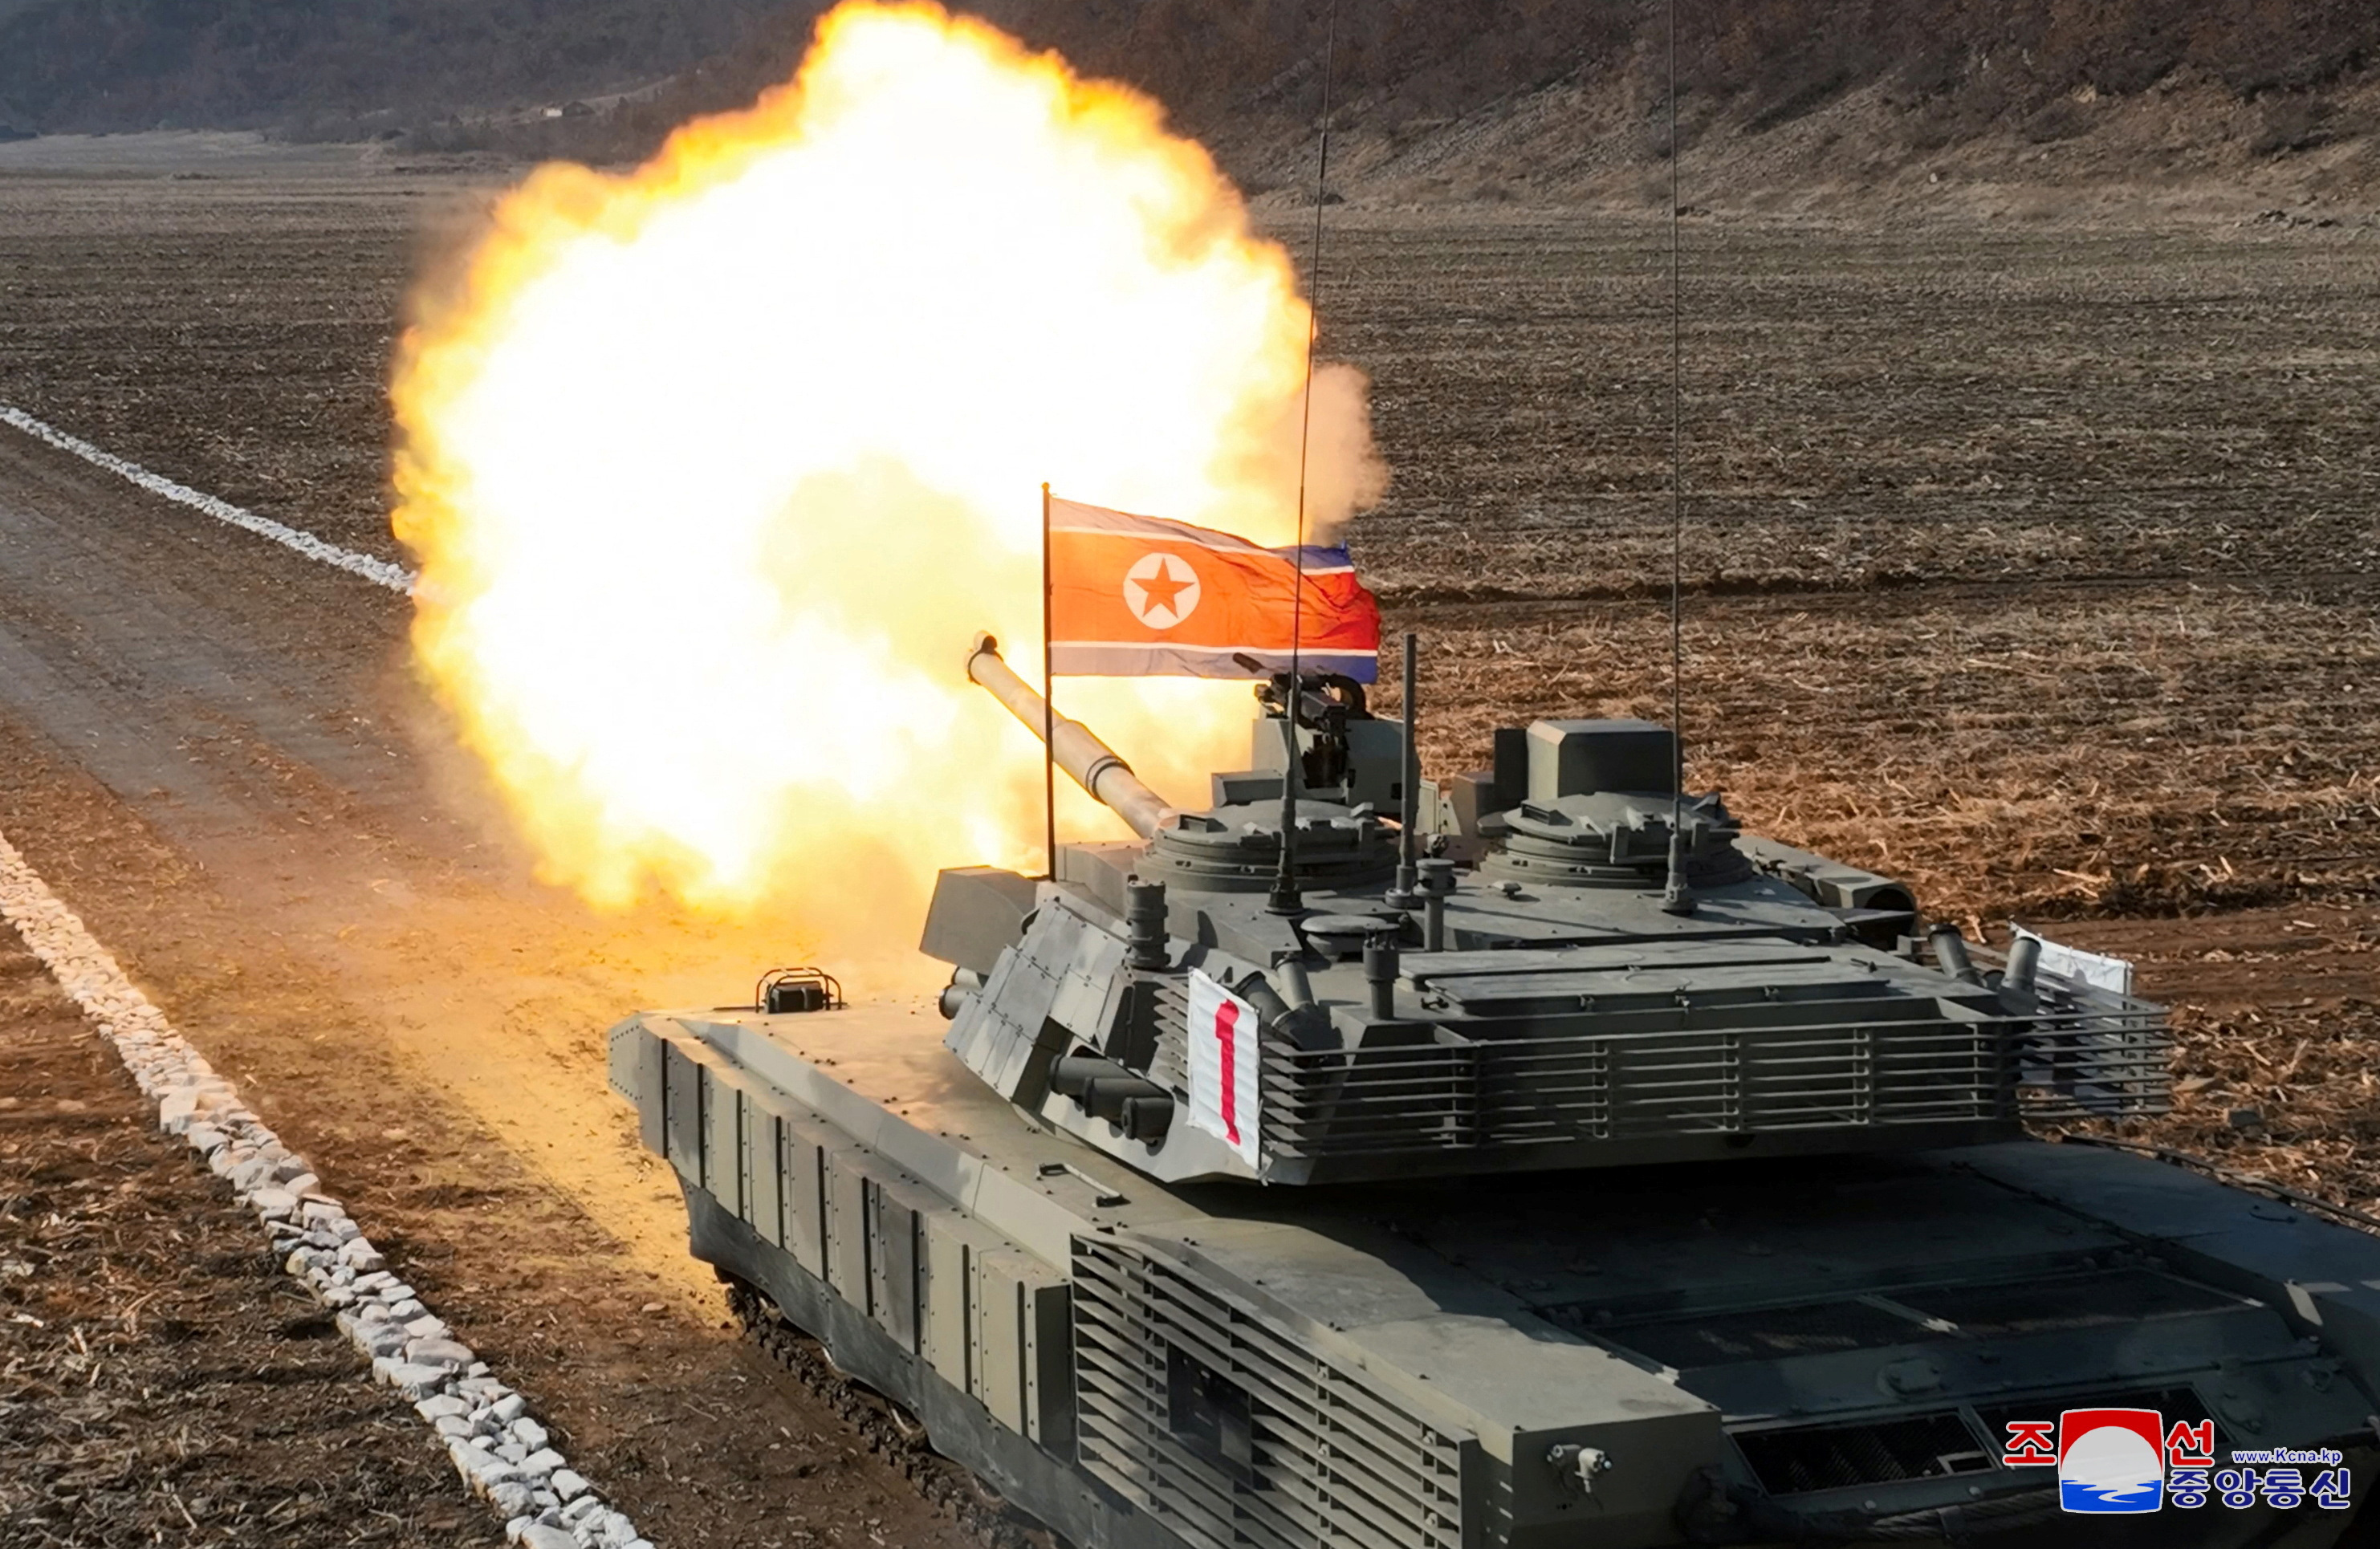 Analysis: New North Korea MBT Main Battle Tank appears at February